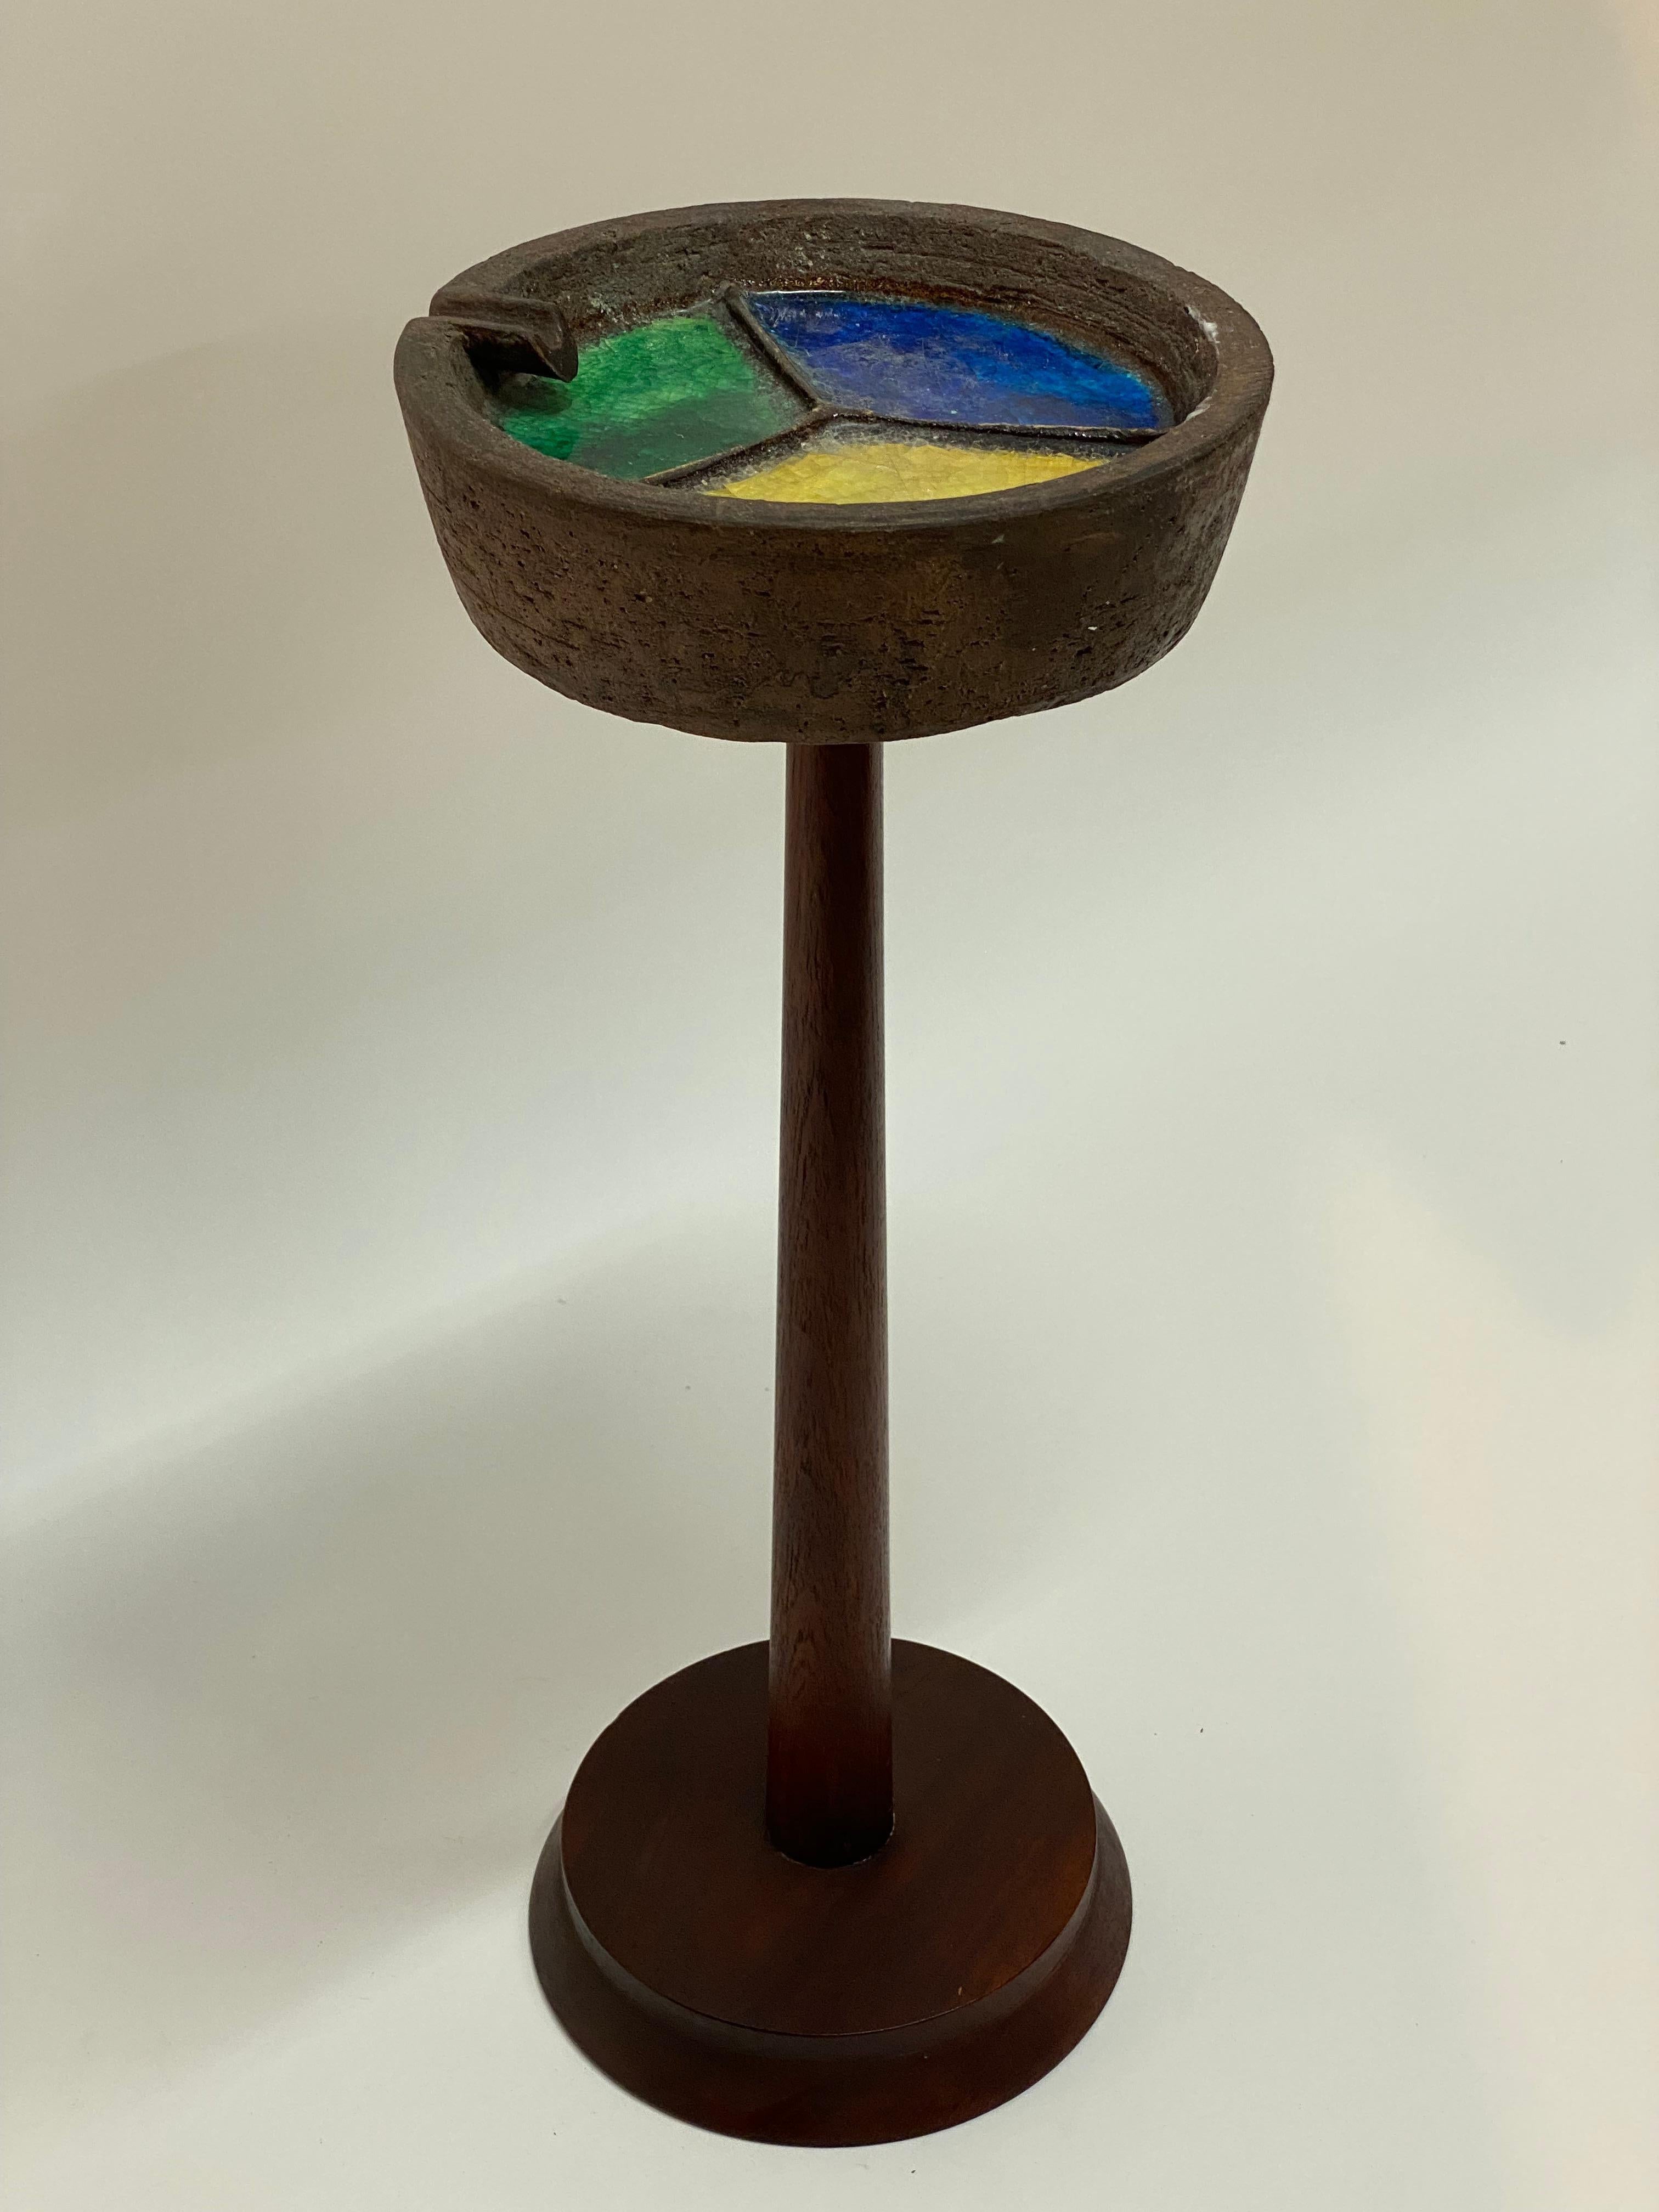 Aldo Londi for Bitossi fused glass decorated ceramic ashtray and walnut stand. Classic 